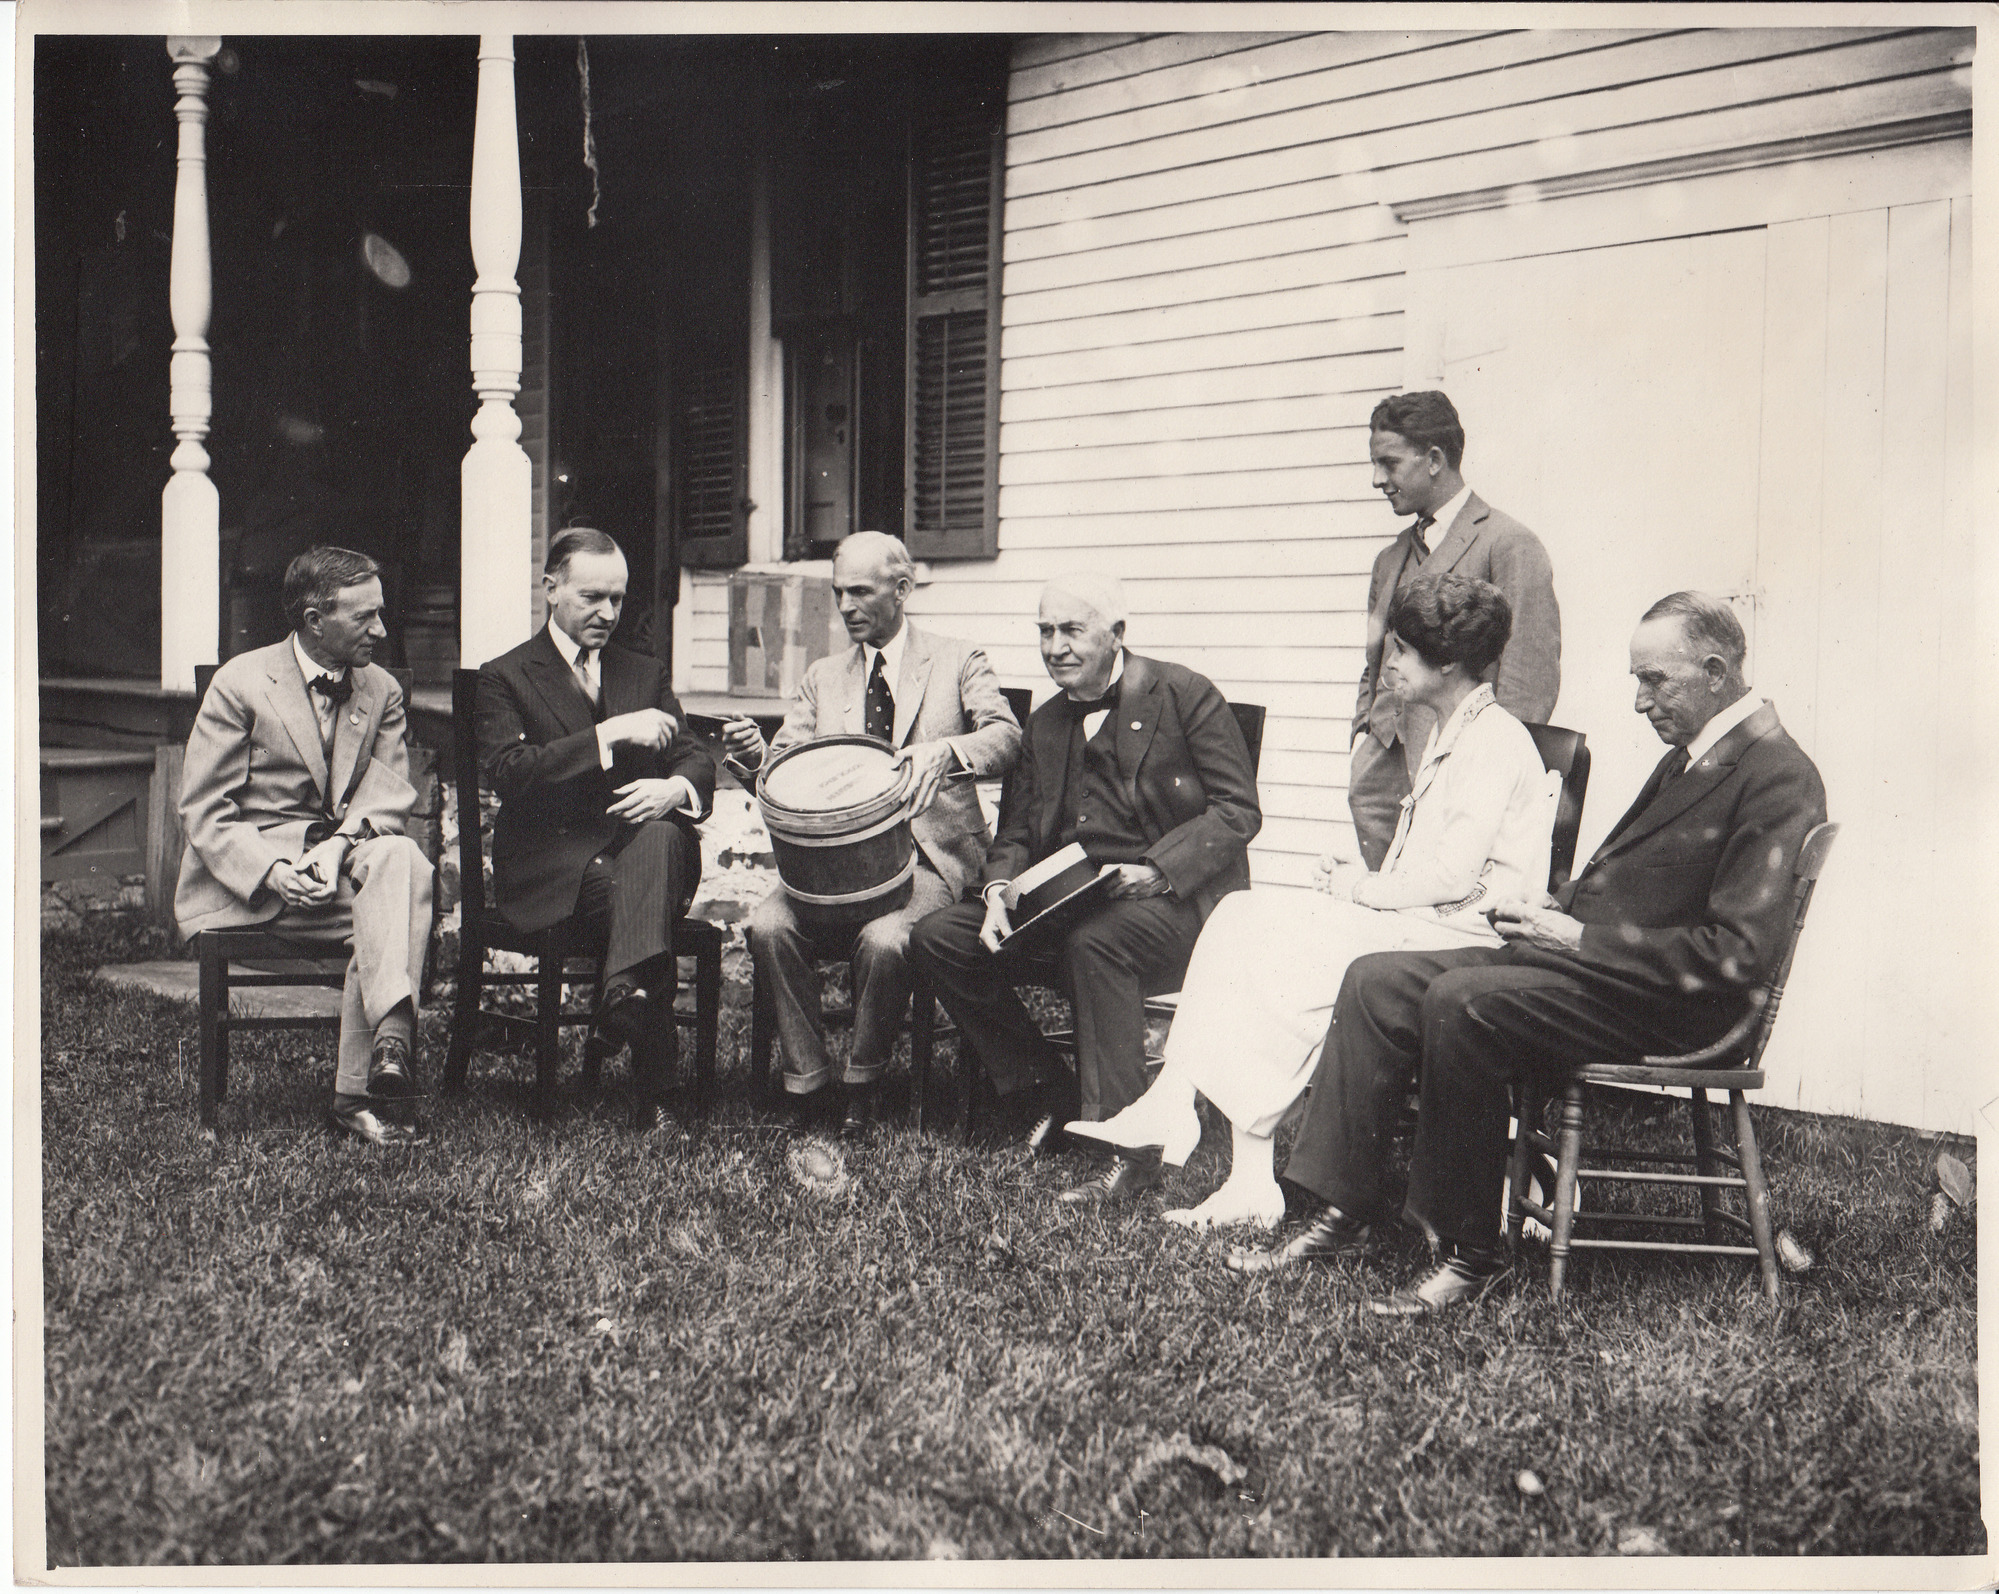 Harvey S. Firestone, President Calvin Coolidge, Henry Ford, Thomas Edison, Russell A. Firestone, Grace Coolidge, and John C. Coolidge visiting Coolidge Farm.